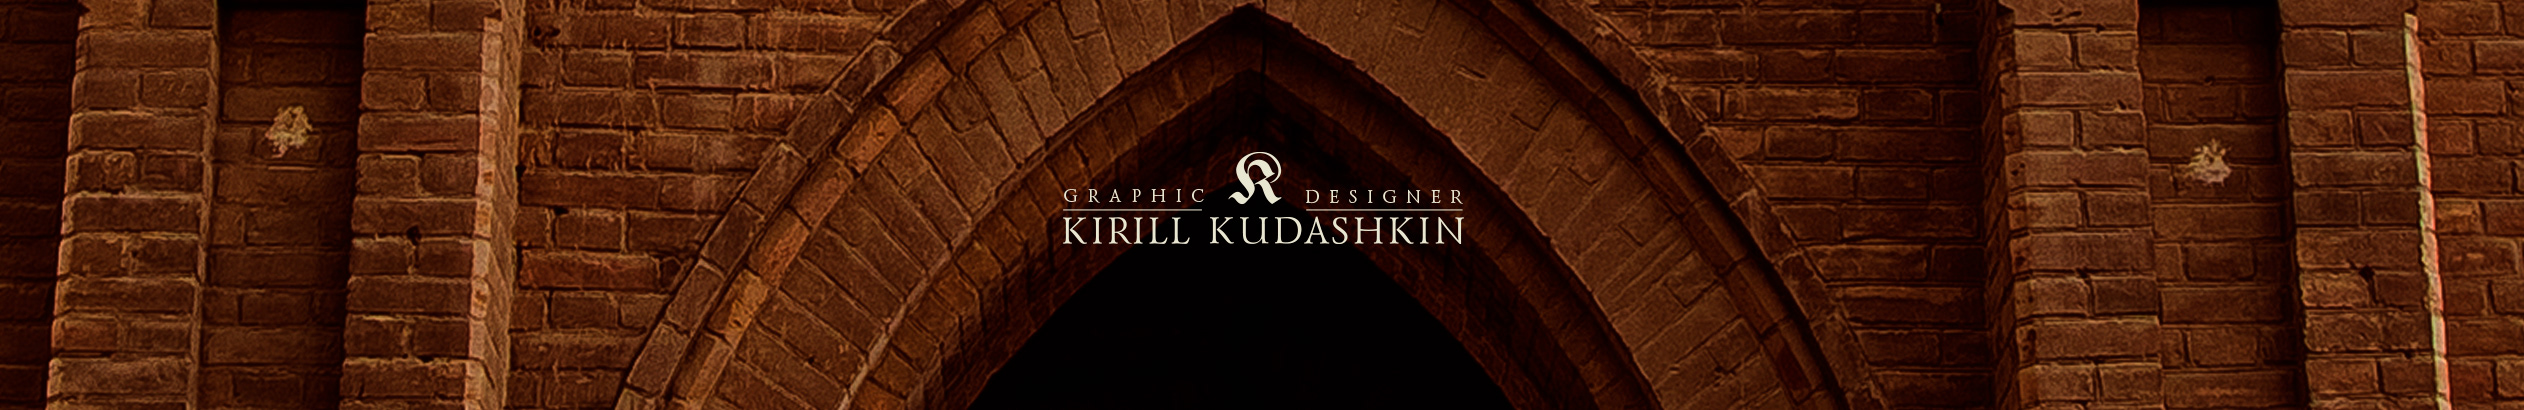 Kirill Kudashkin's profile banner